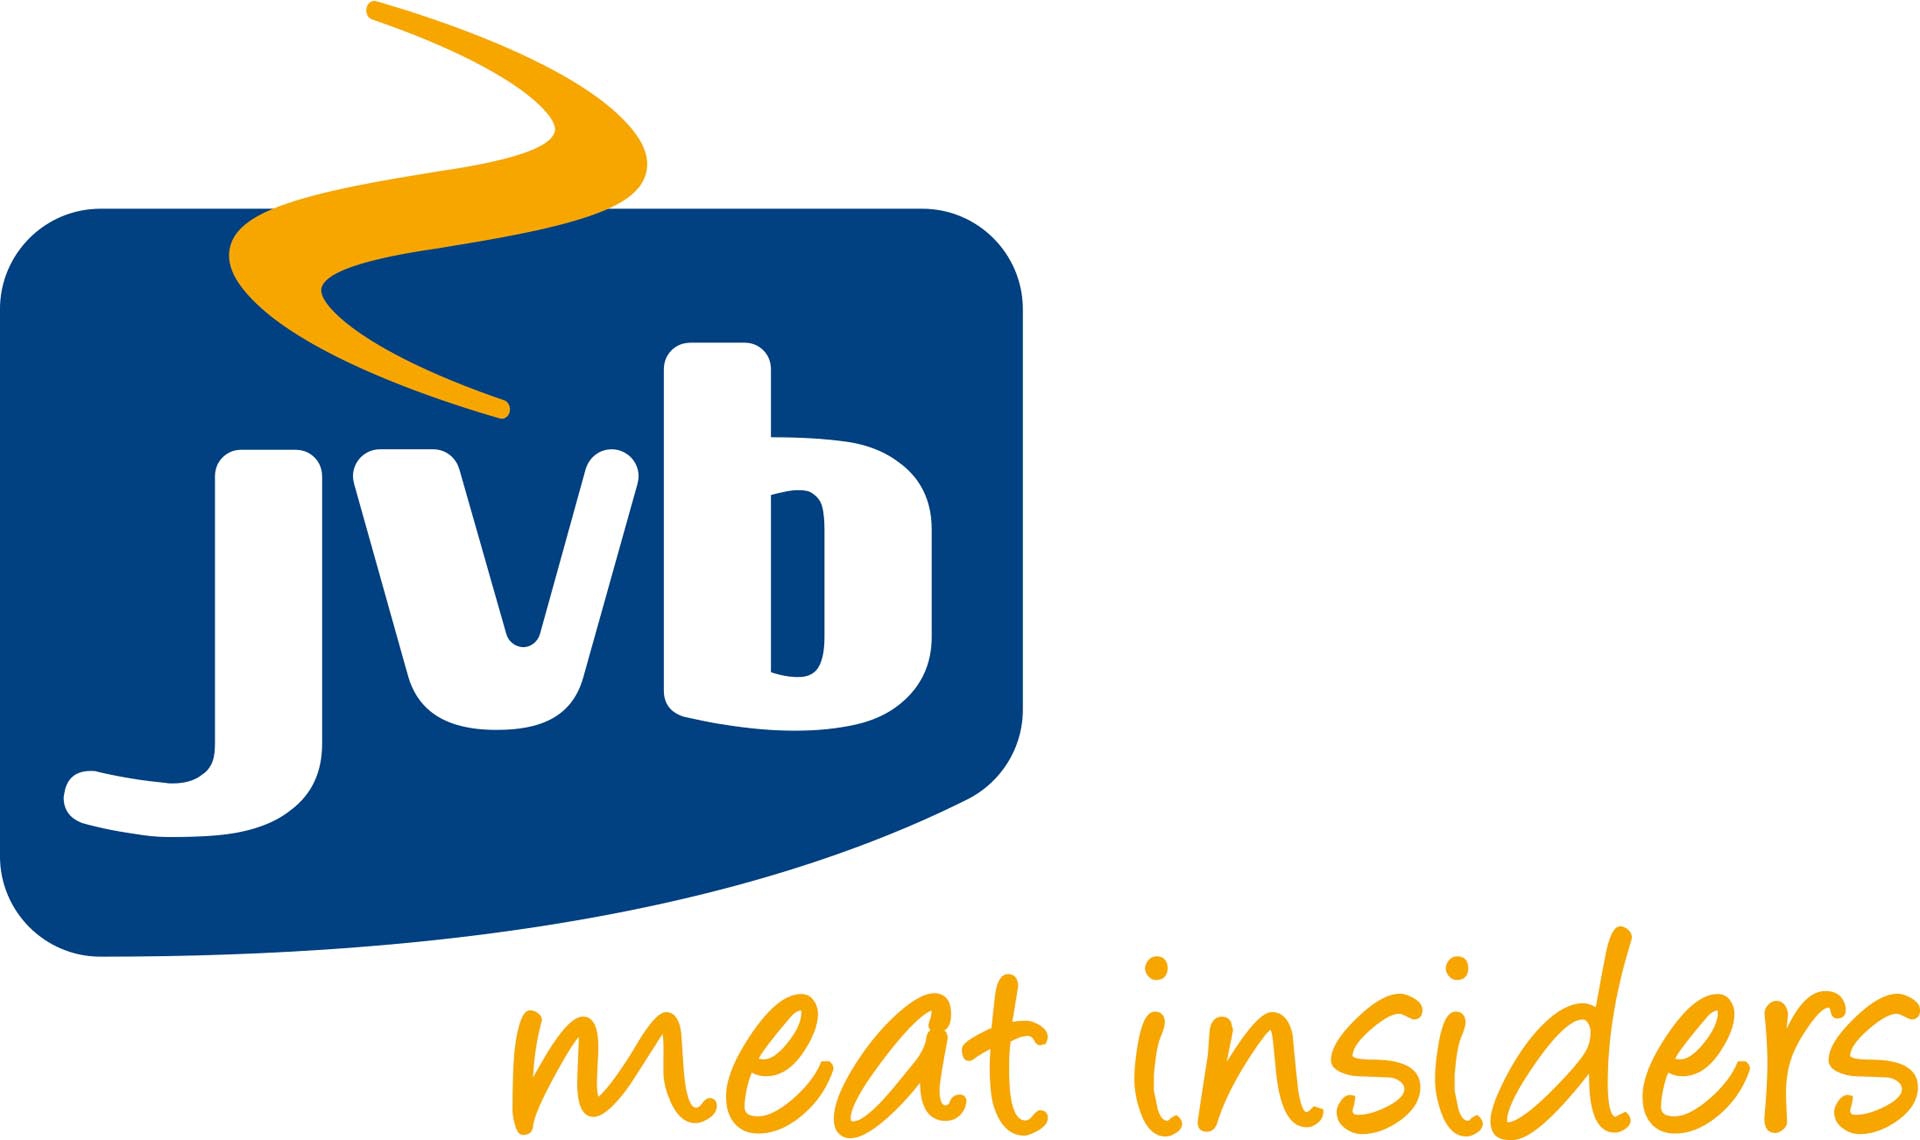 Overname JvB Meat Insiders bv